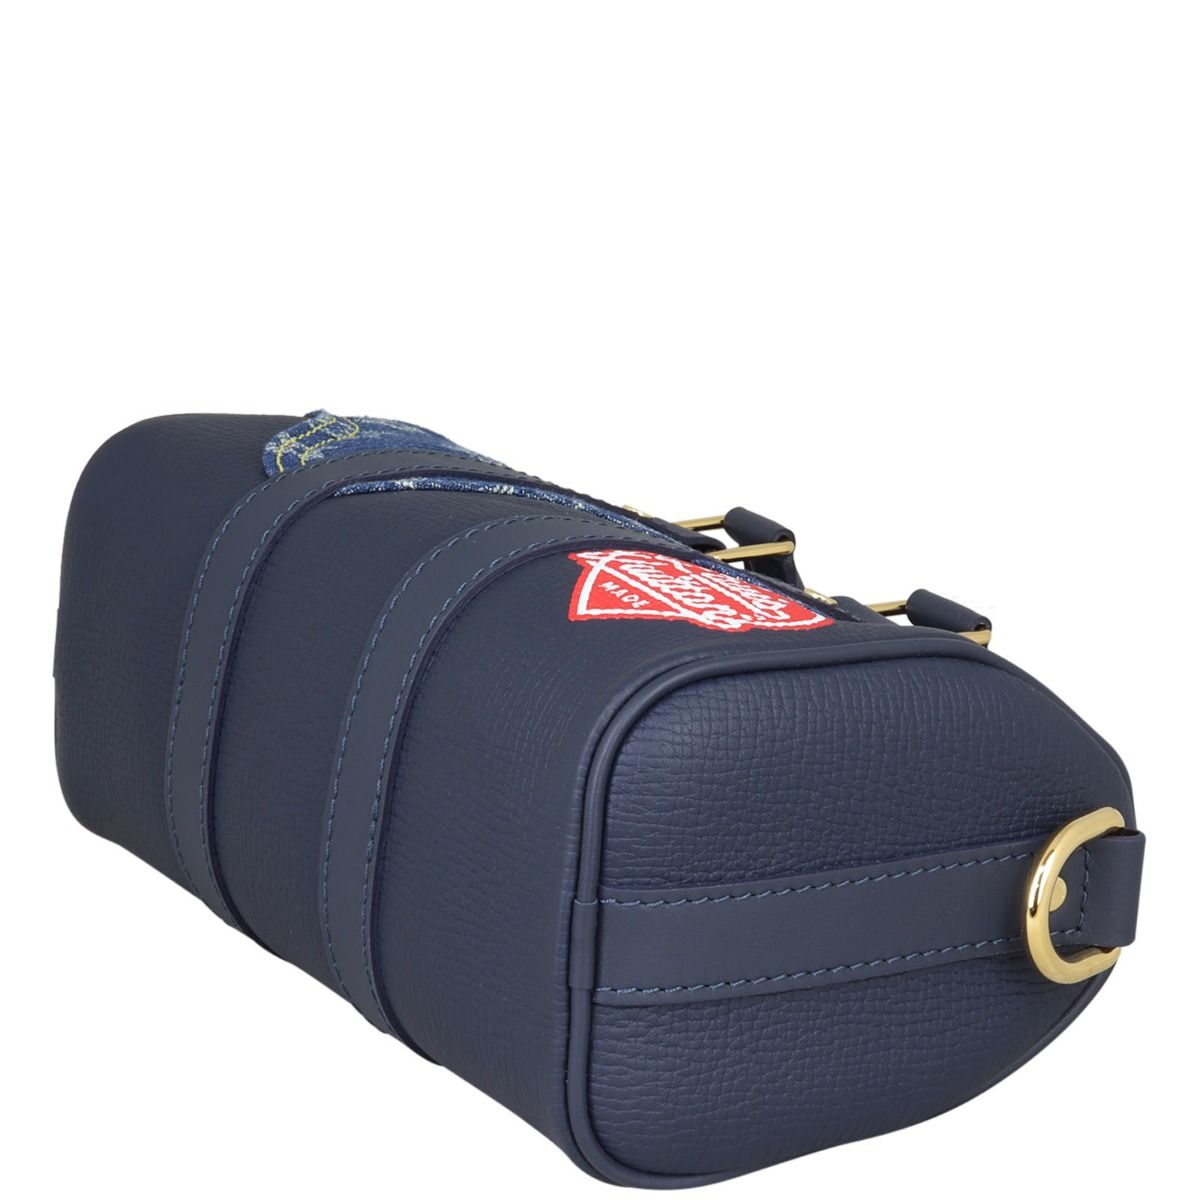 Louis Vuitton Monogram Denim Small Keepall Duffle Bag CBRXZDU 144030002274